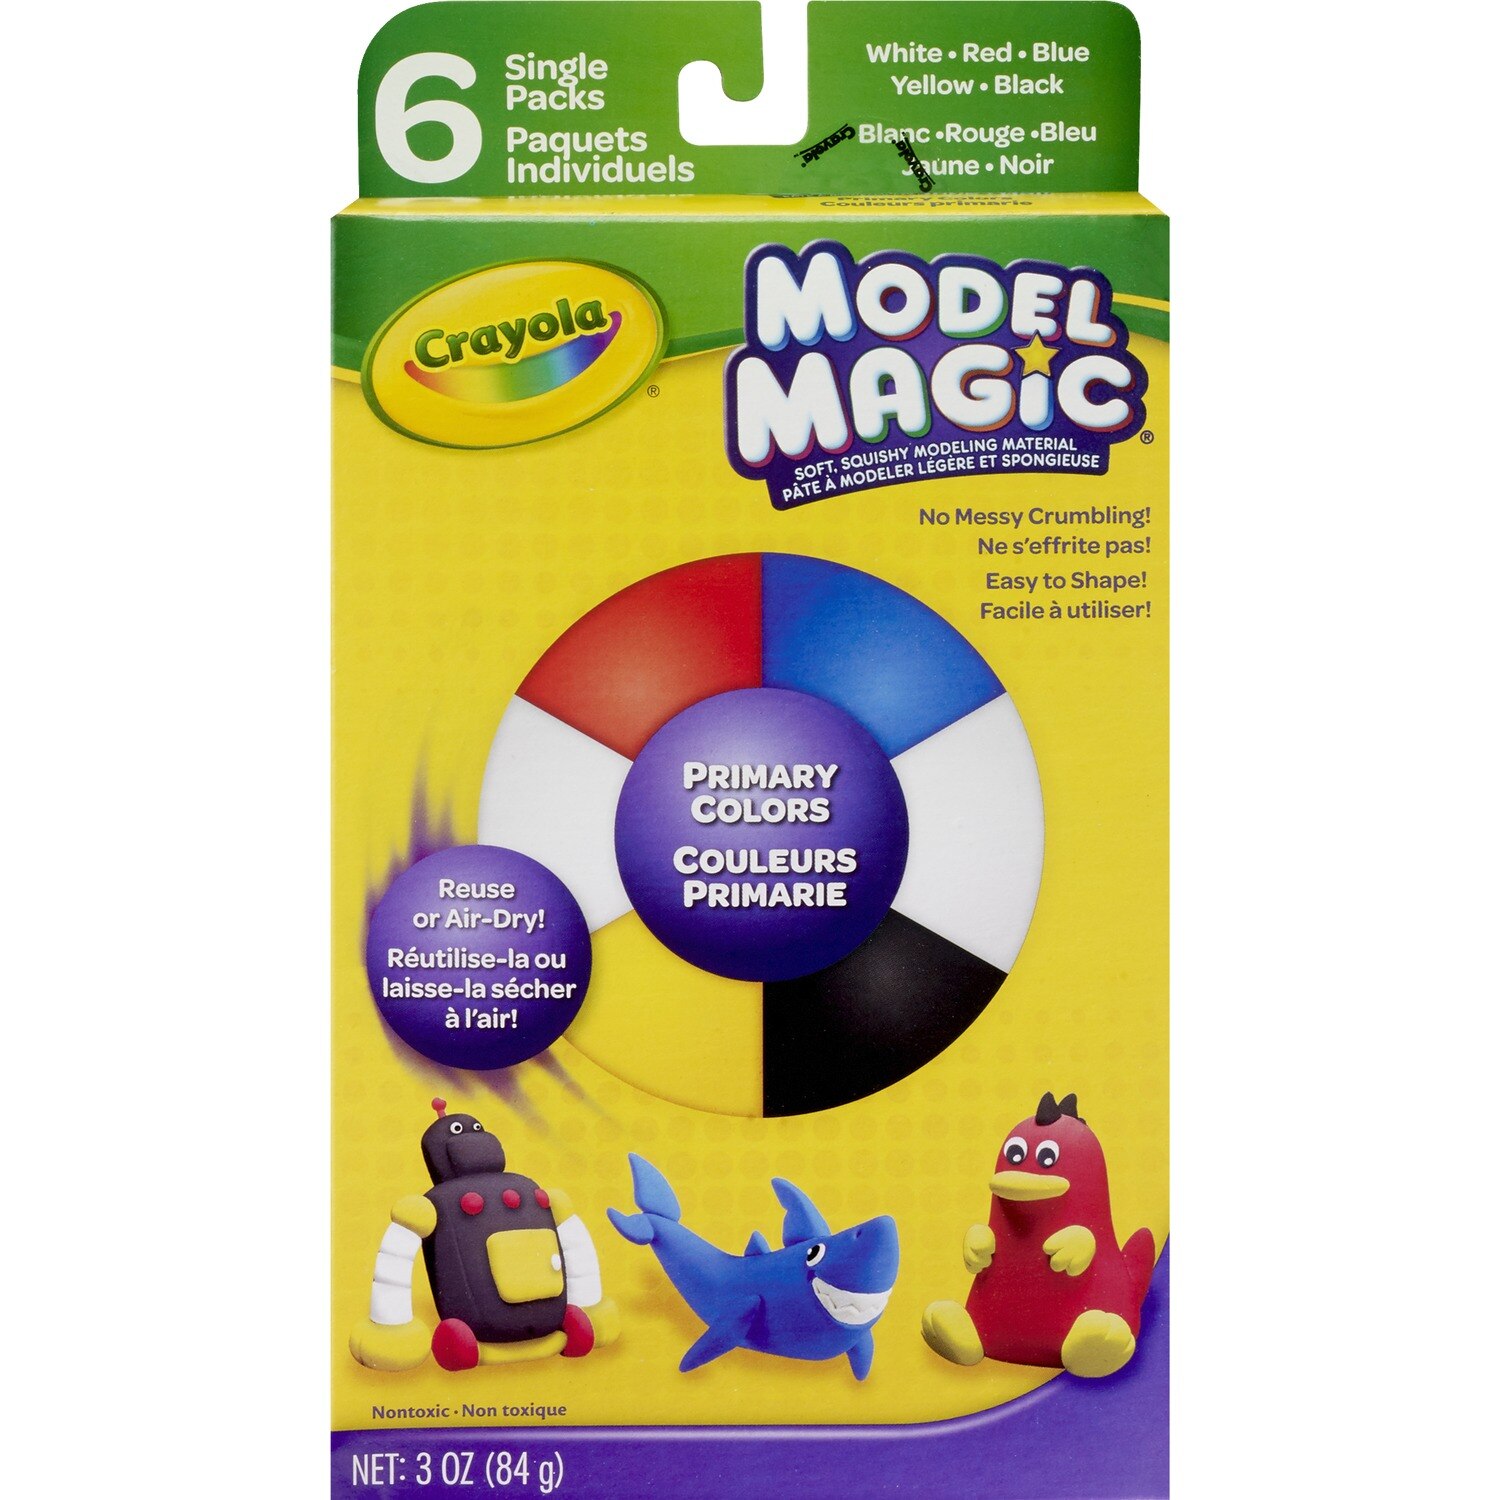 Crayola Modeling Material 6 Single Packs